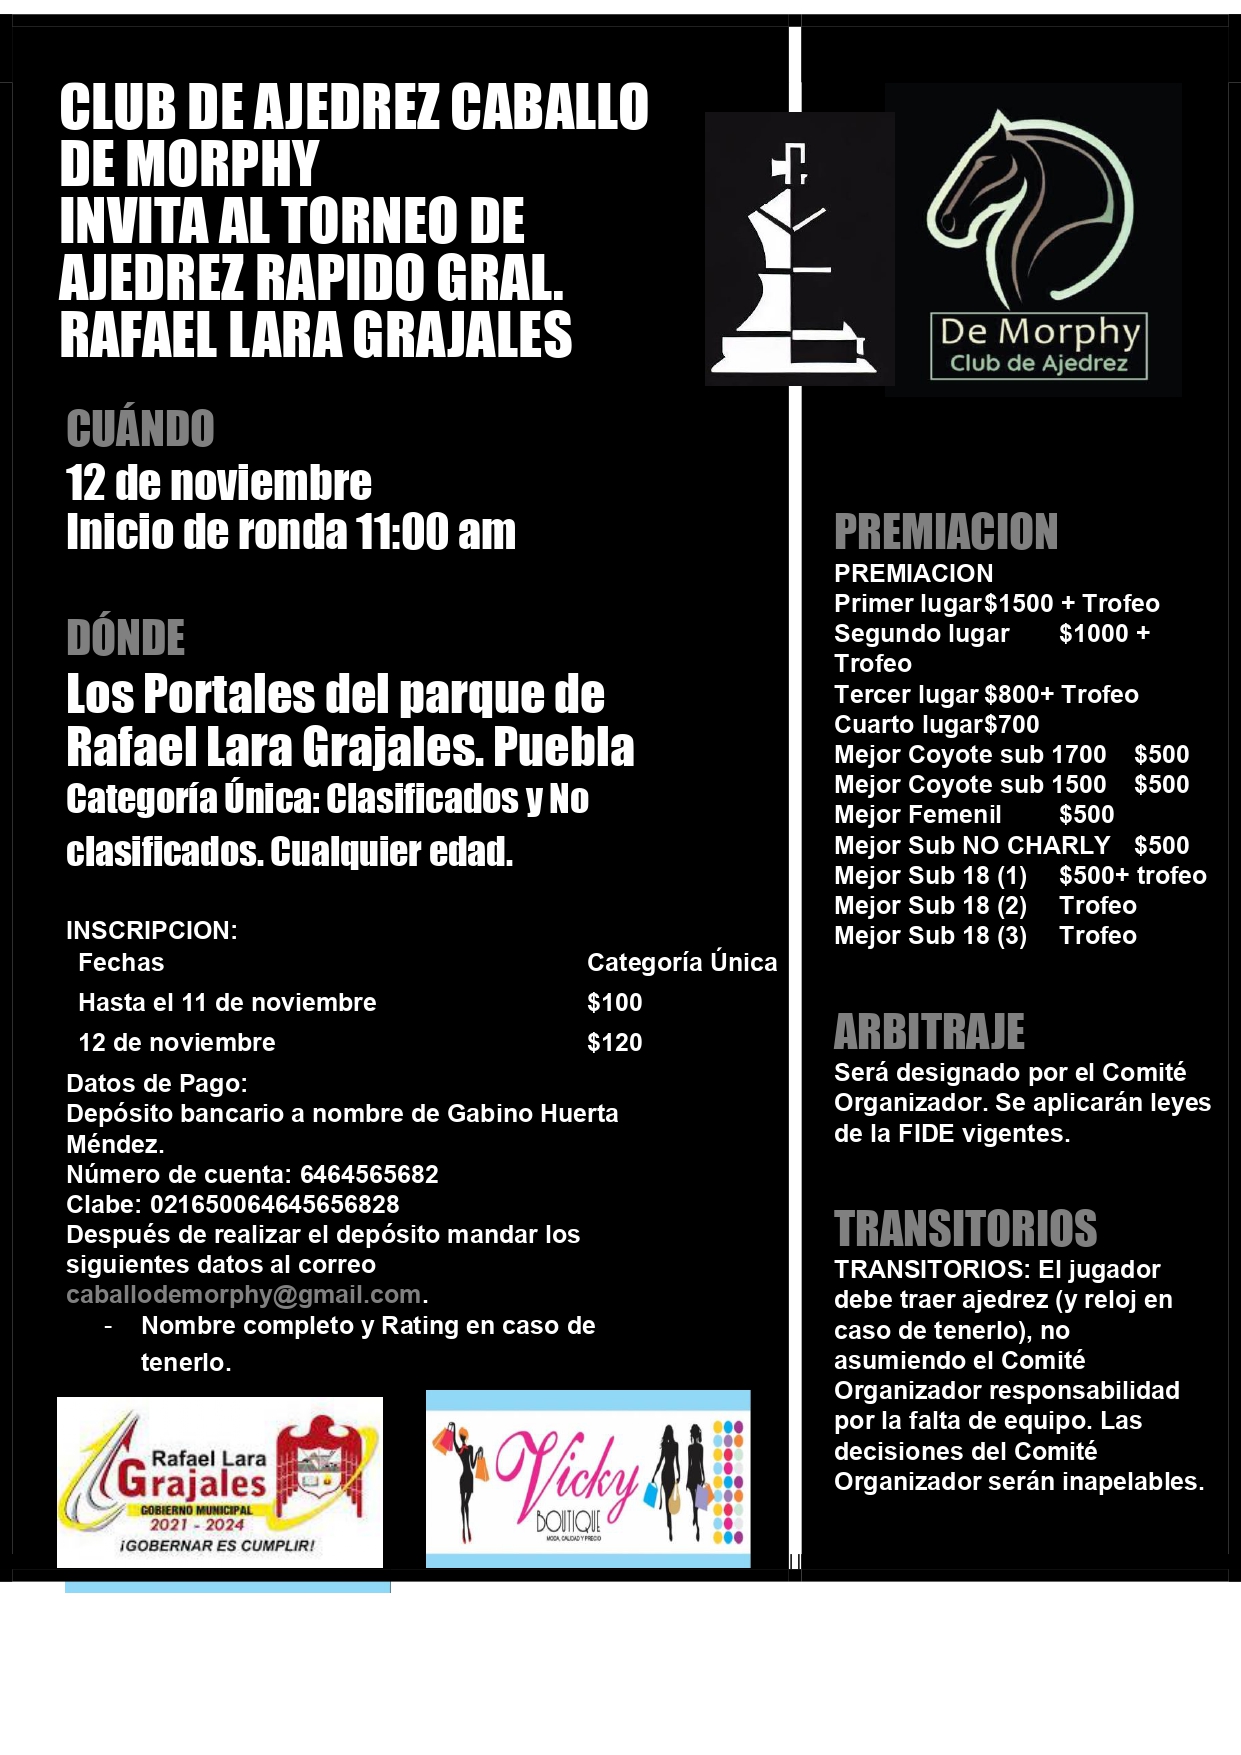 Torneo de Ajedrez Rapido Gral Rafael Lara Grajales